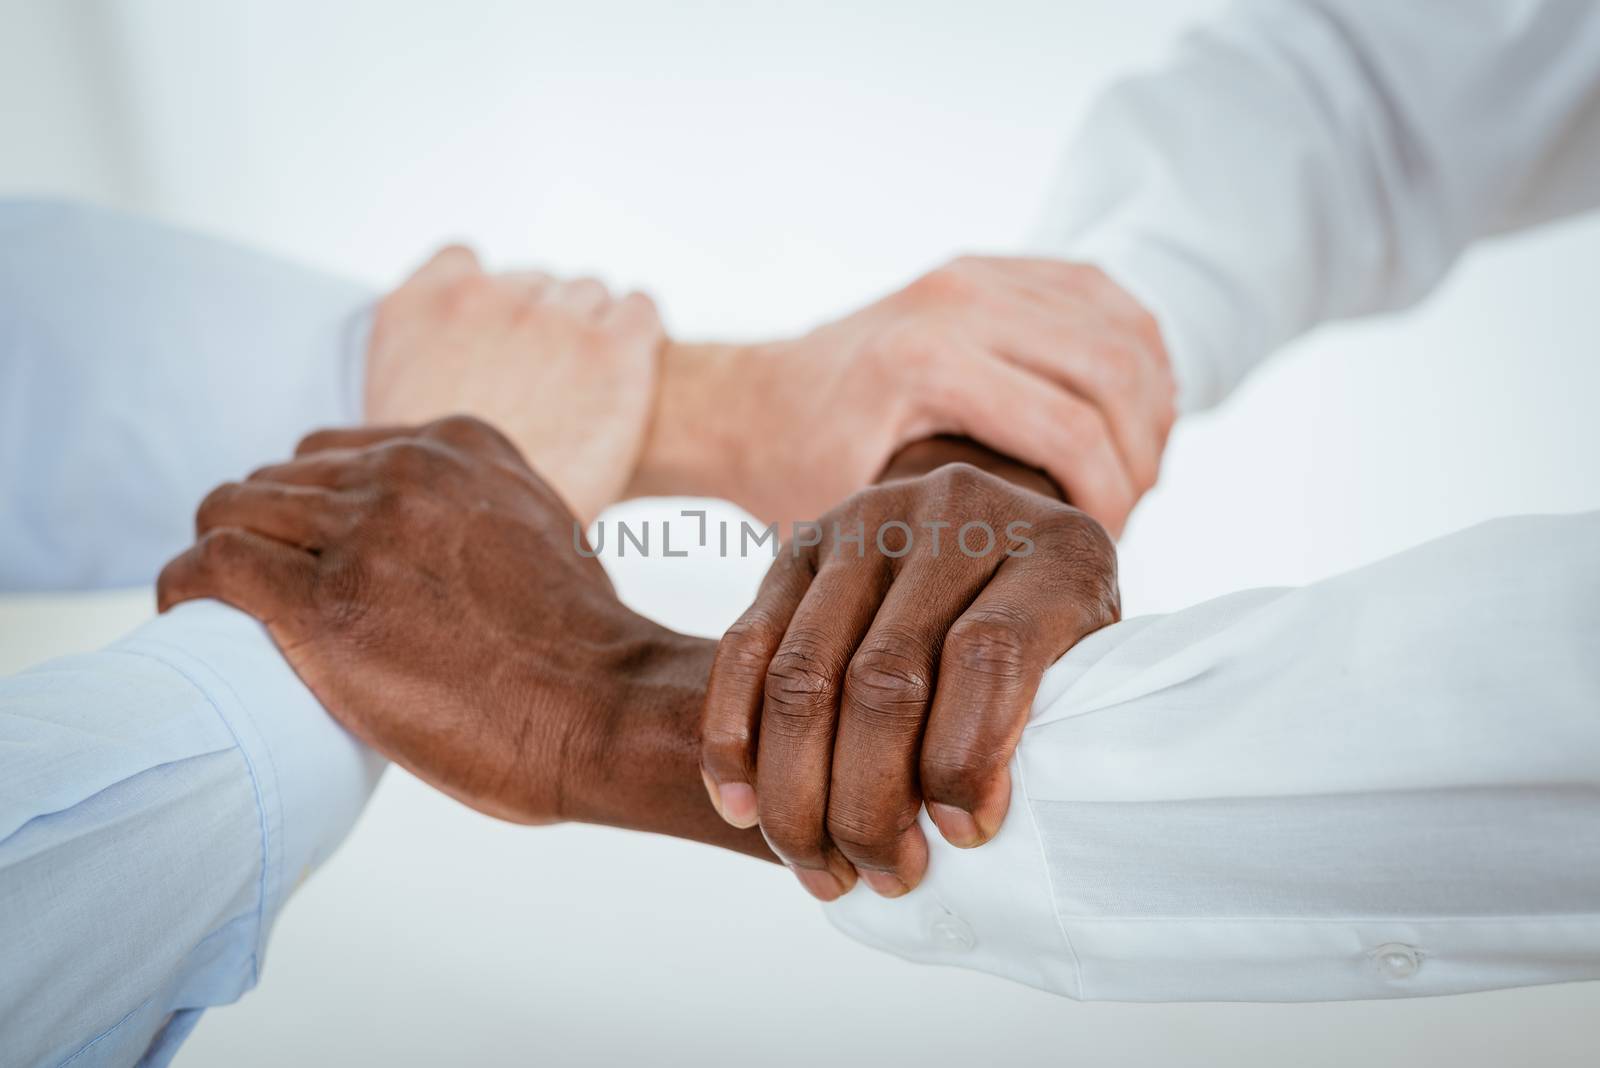 United Through Their Diversity by MilanMarkovic78